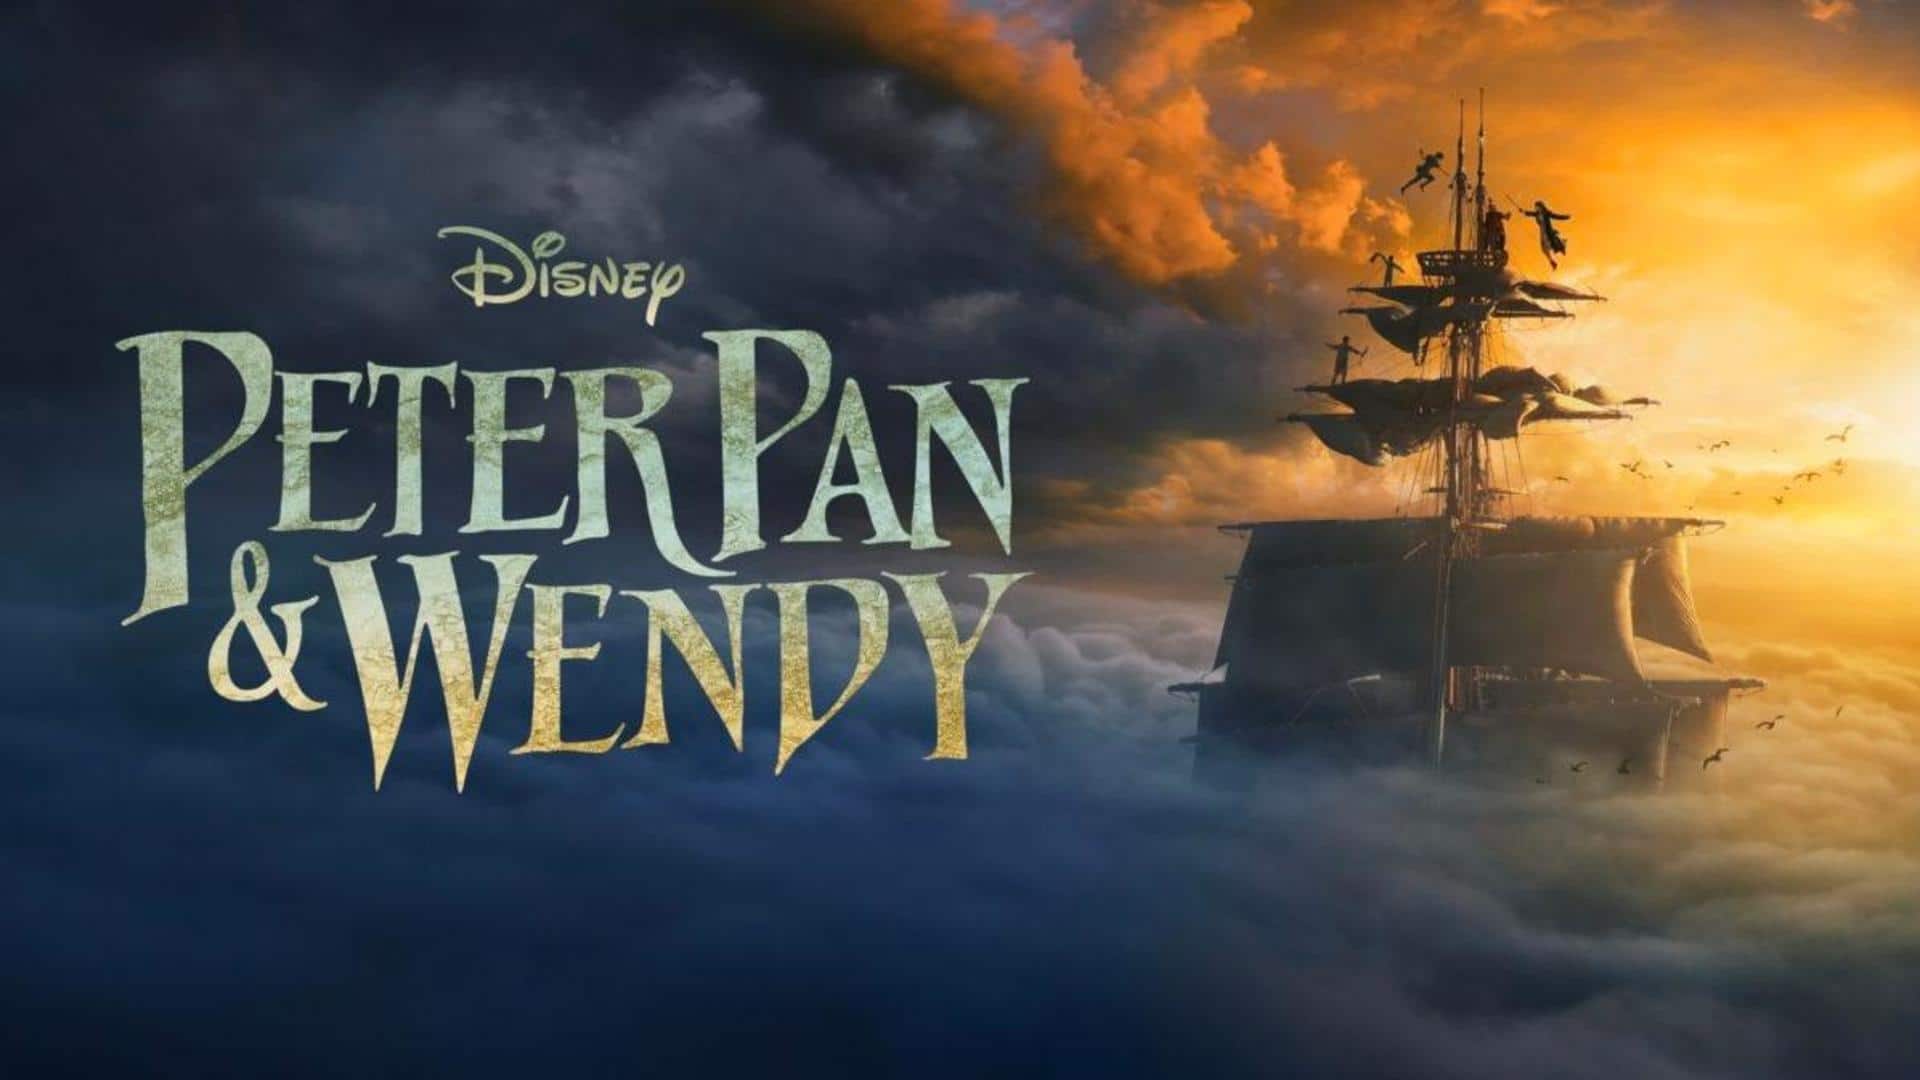 'Peter Pan & Wendy' trailer: Adventurous trip to Neverland awaits